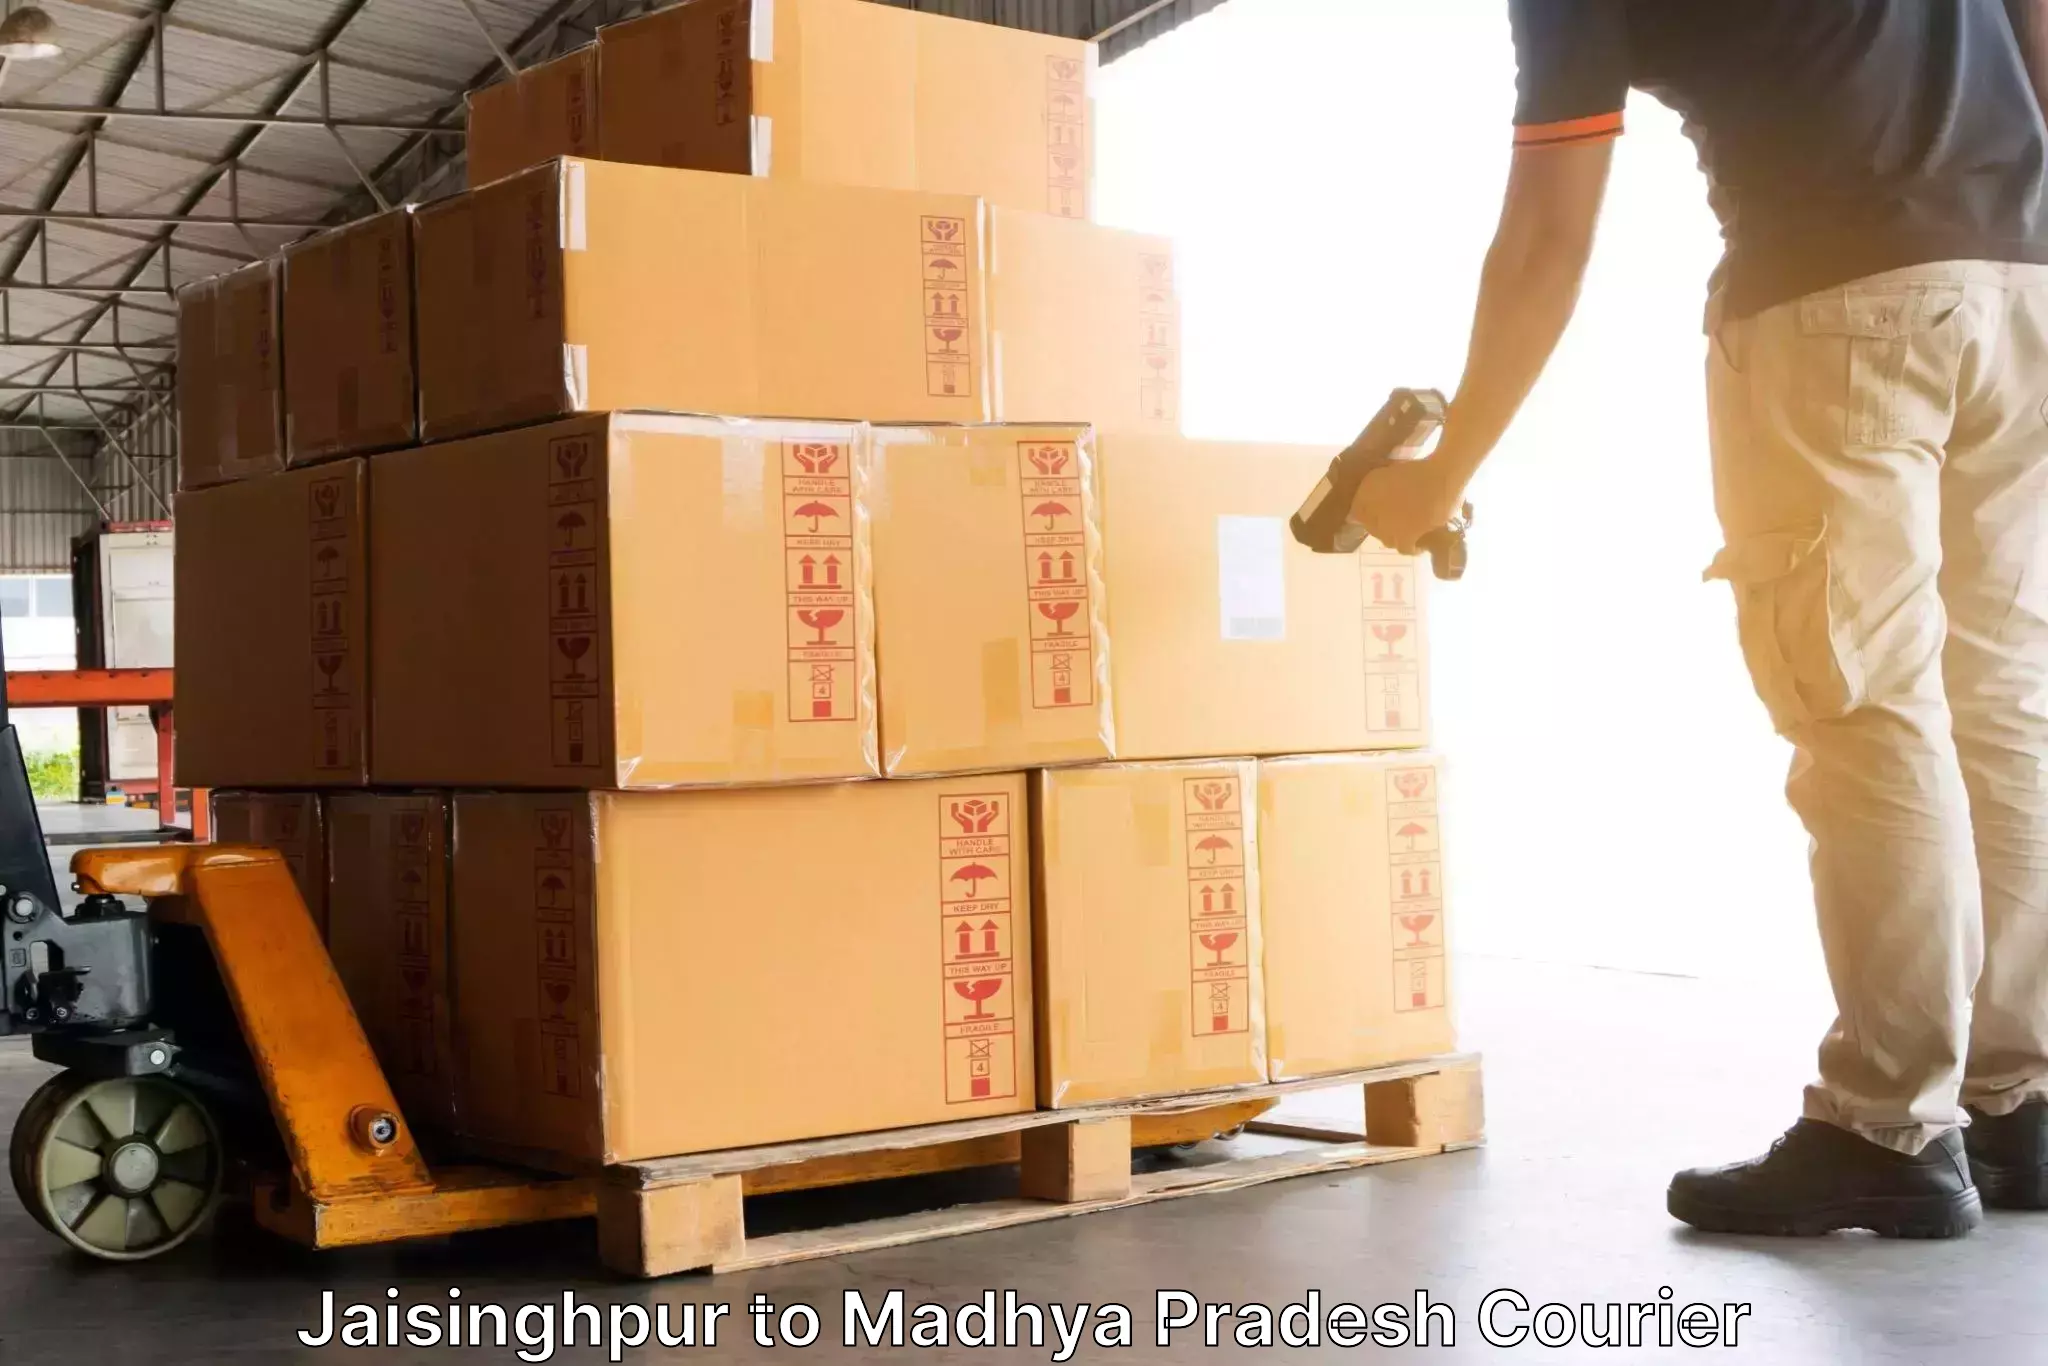 Secure freight services in Jaisinghpur to Raipur Karchuliyan